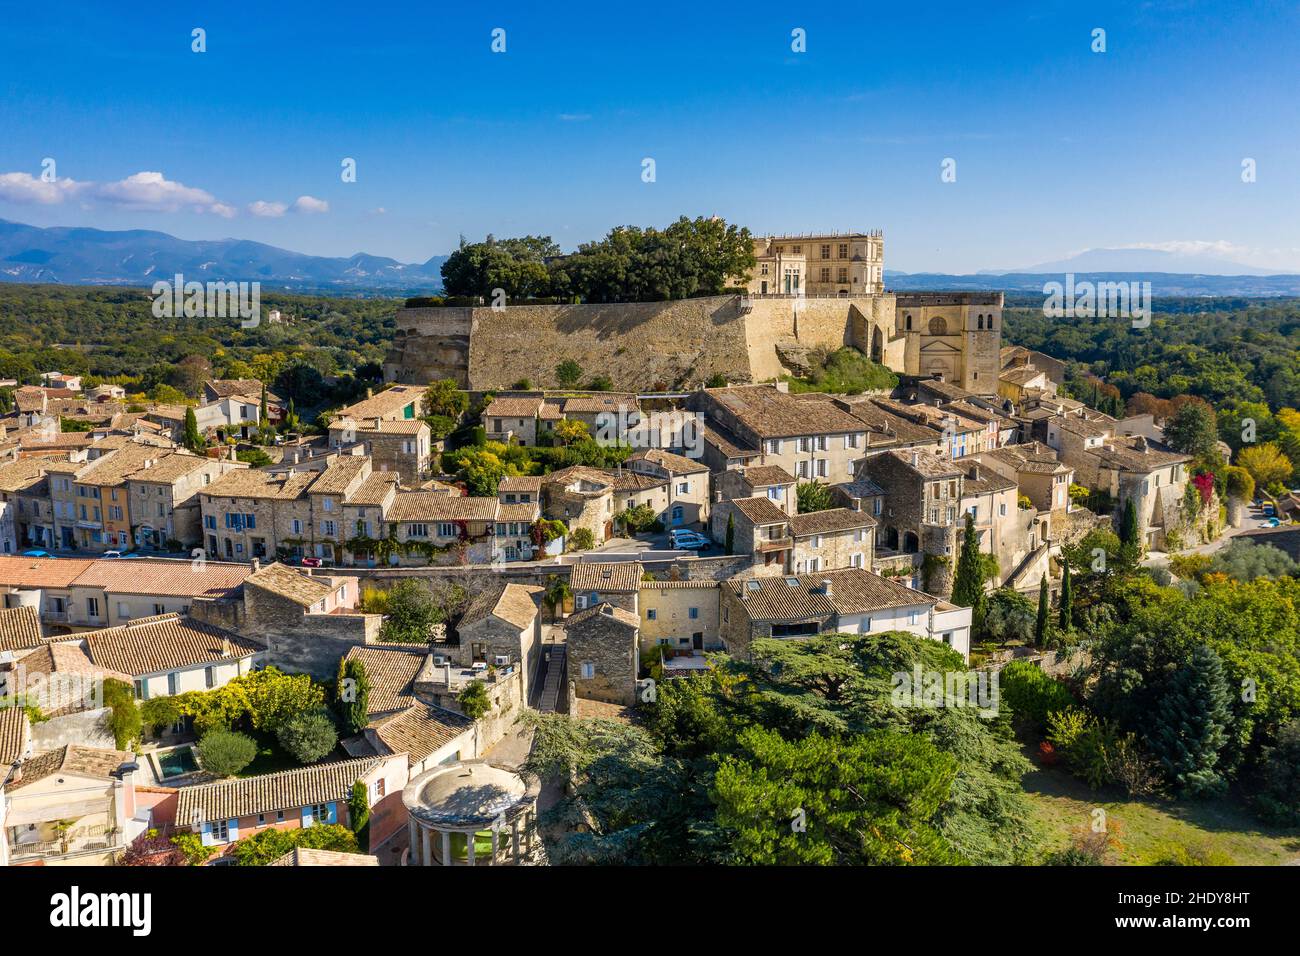 France, Drome, Grignan, labelled Les Plus Beaux Villages de France (The Most Beautiful Villages of France), the village surmounted by the castle where Stock Photo